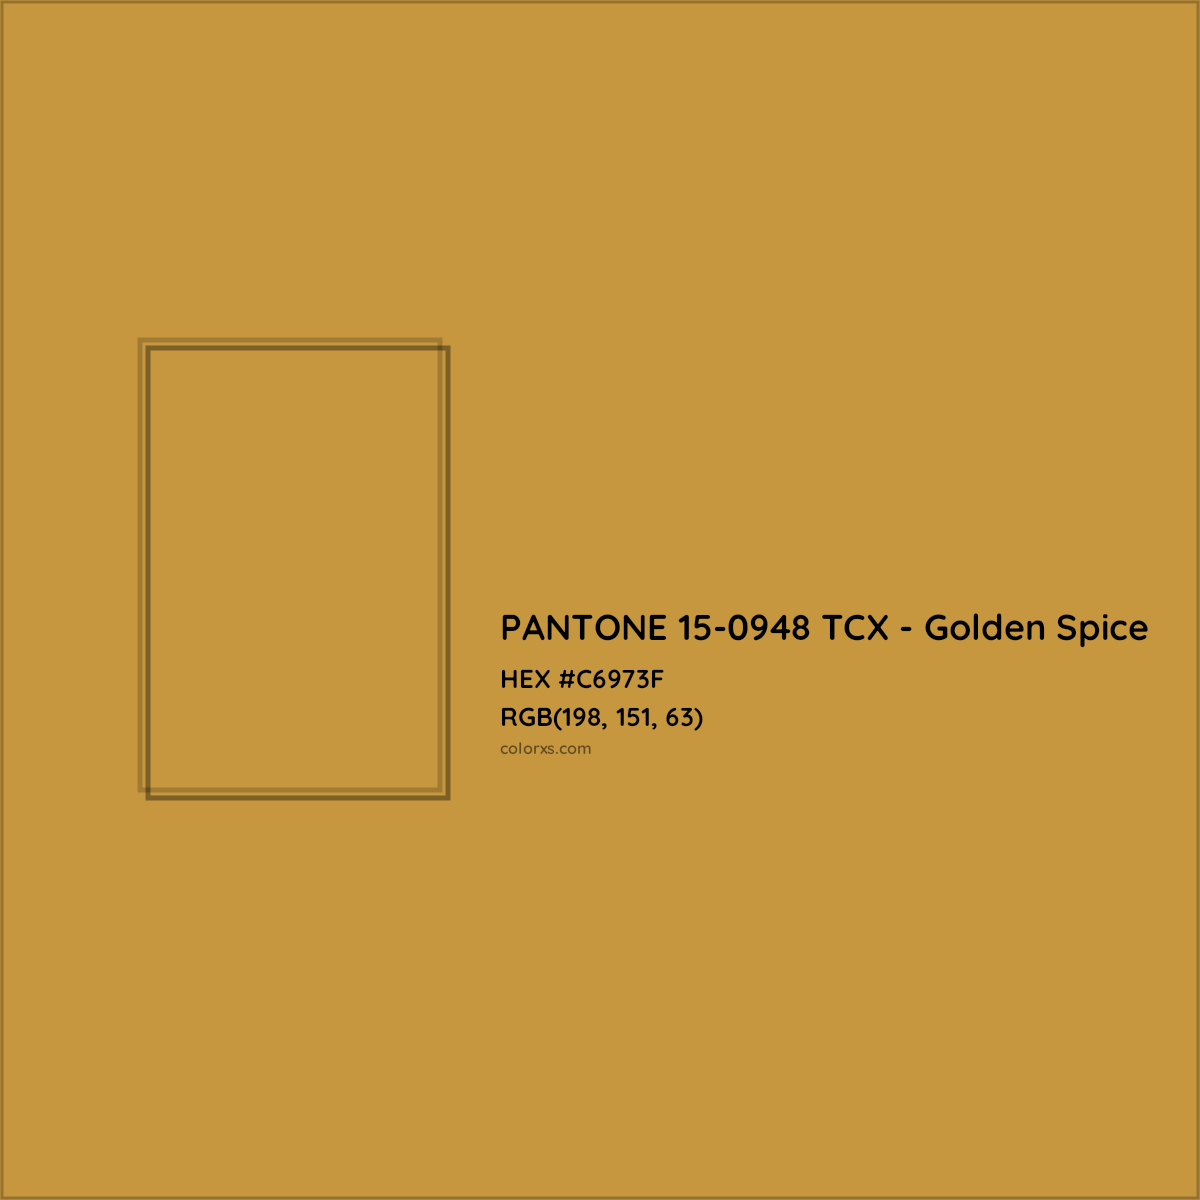 HEX #C6973F PANTONE 15-0948 TCX - Golden Spice CMS Pantone TCX - Color Code